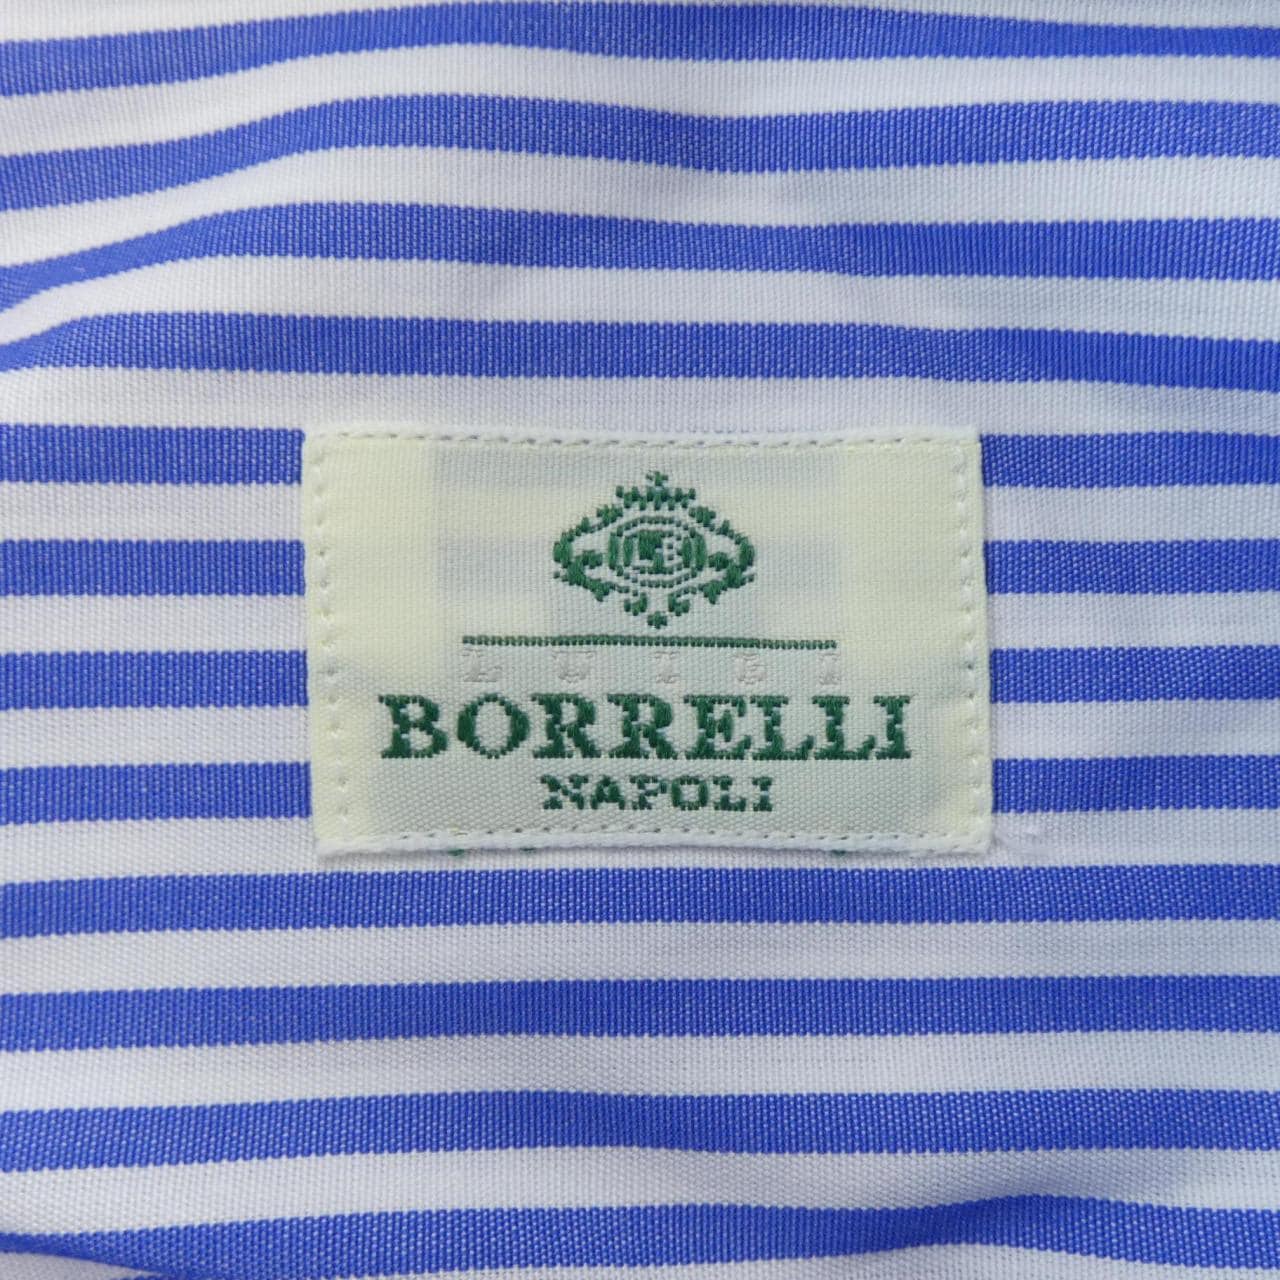 Luigi Borrelli LUIGI BORRELLI shirt